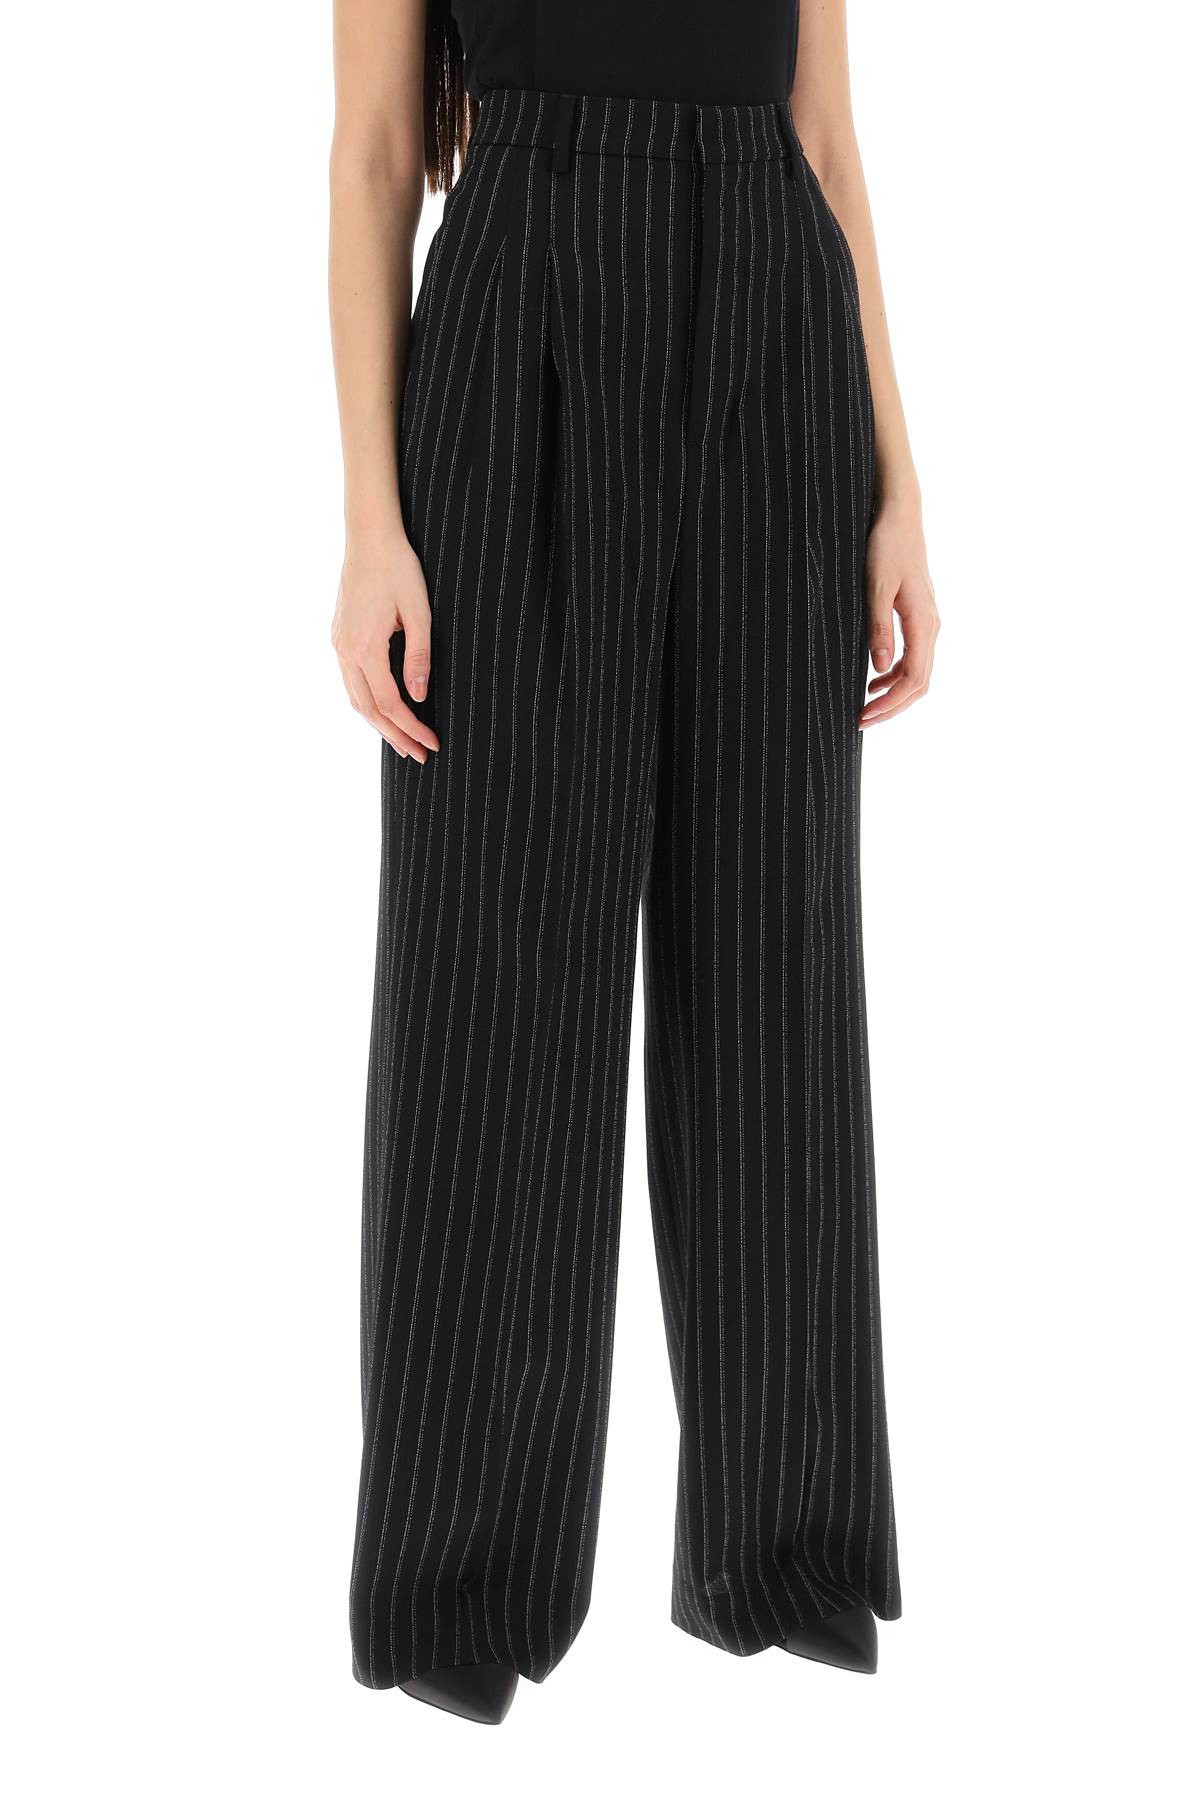 Shop Ami Alexandre Mattiussi Versatile Pinstripe Wide-leg Pants For Women In Black